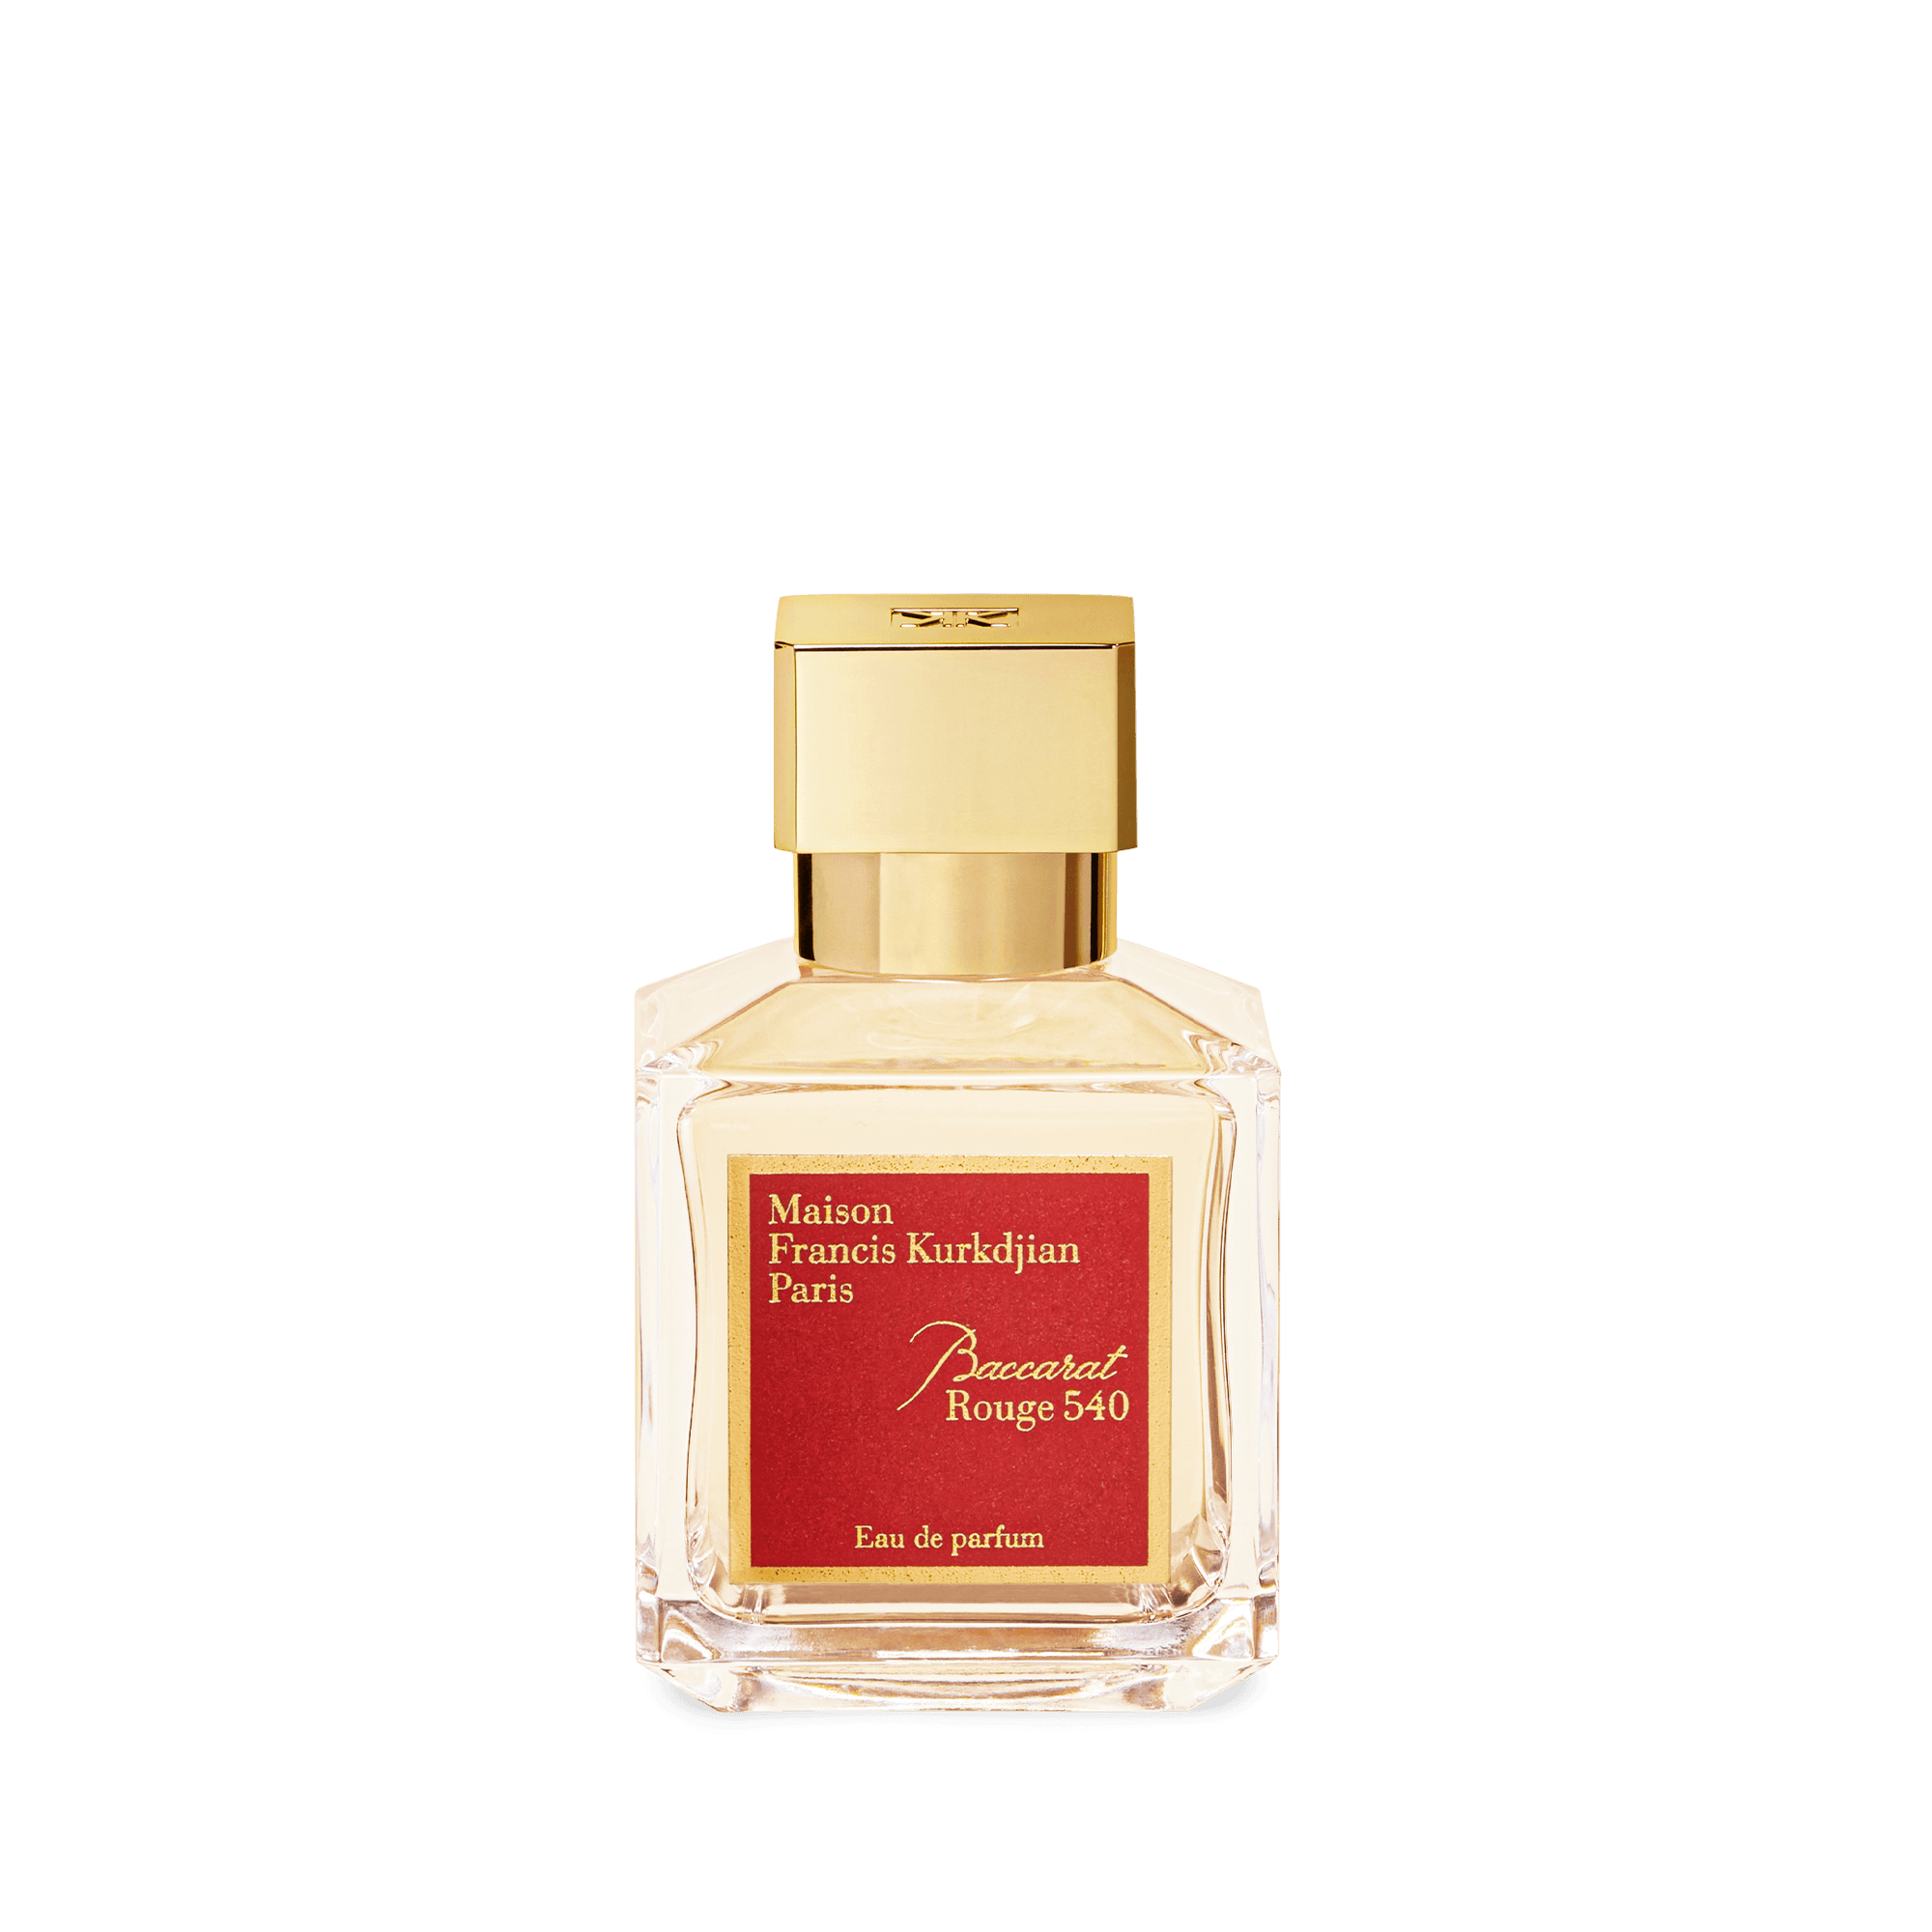 Interview with perfume Francis Kurkdjian